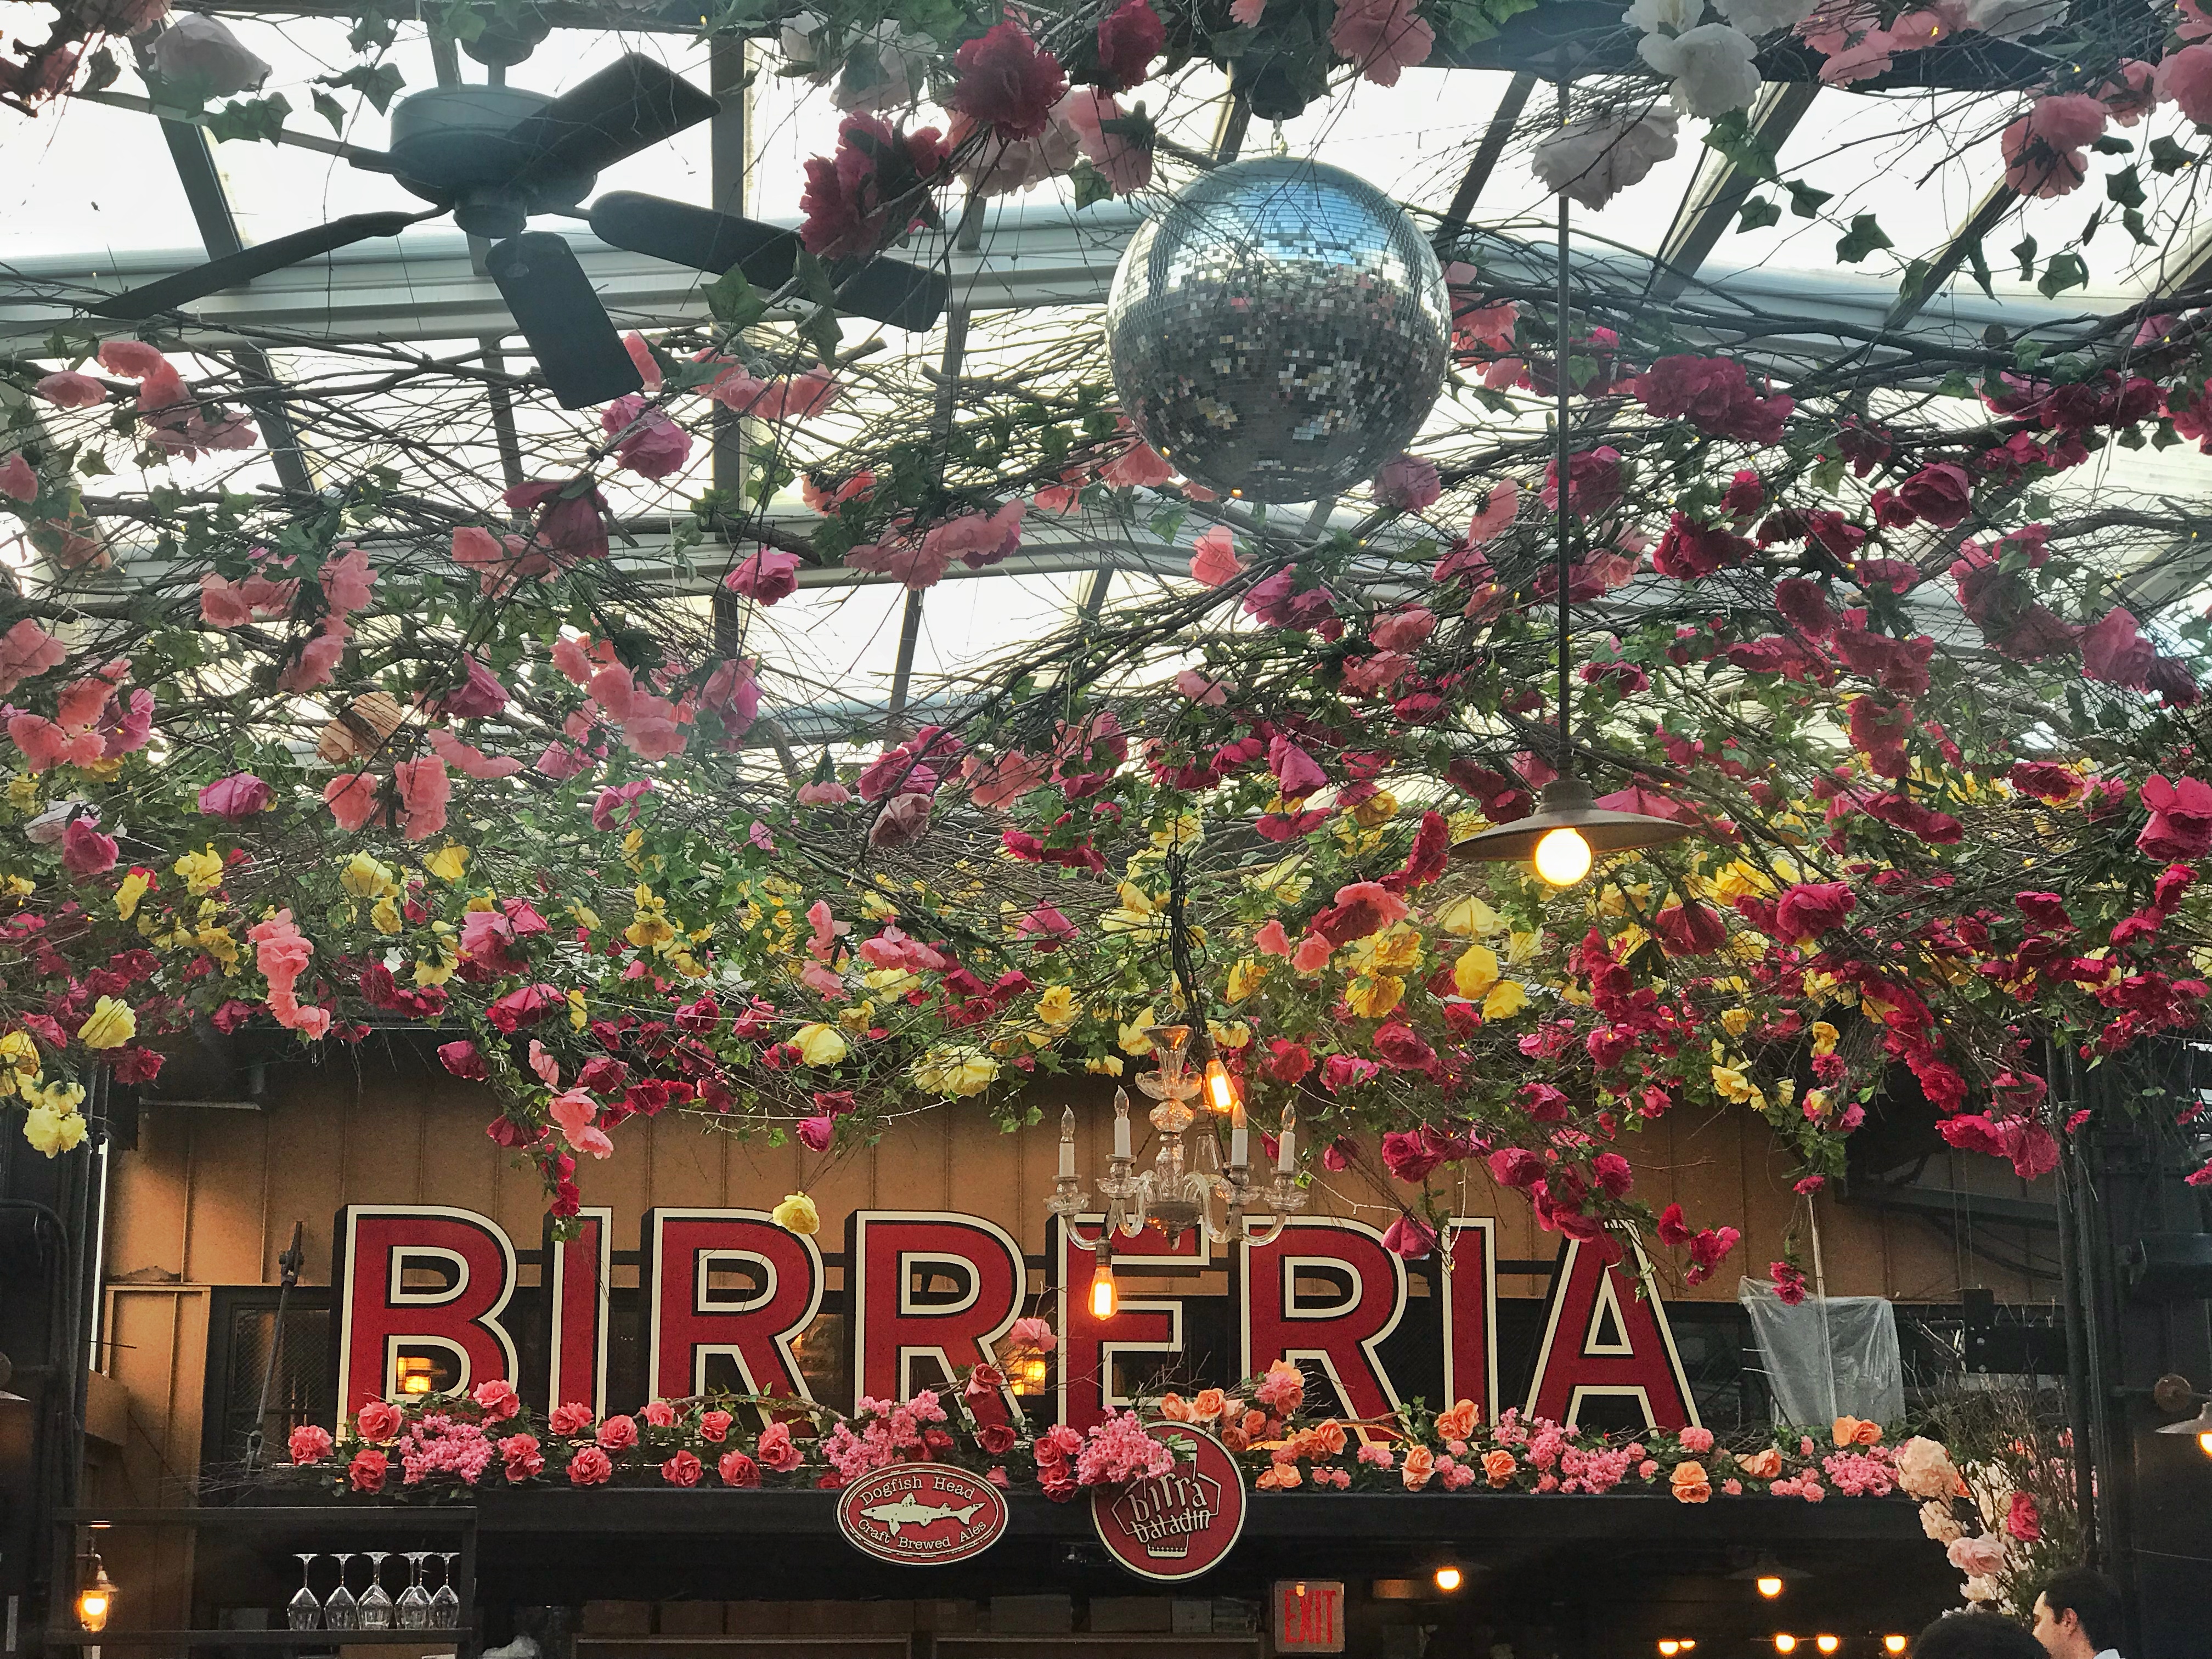 0 Birreria Eataly Italian wine bar Rooftop